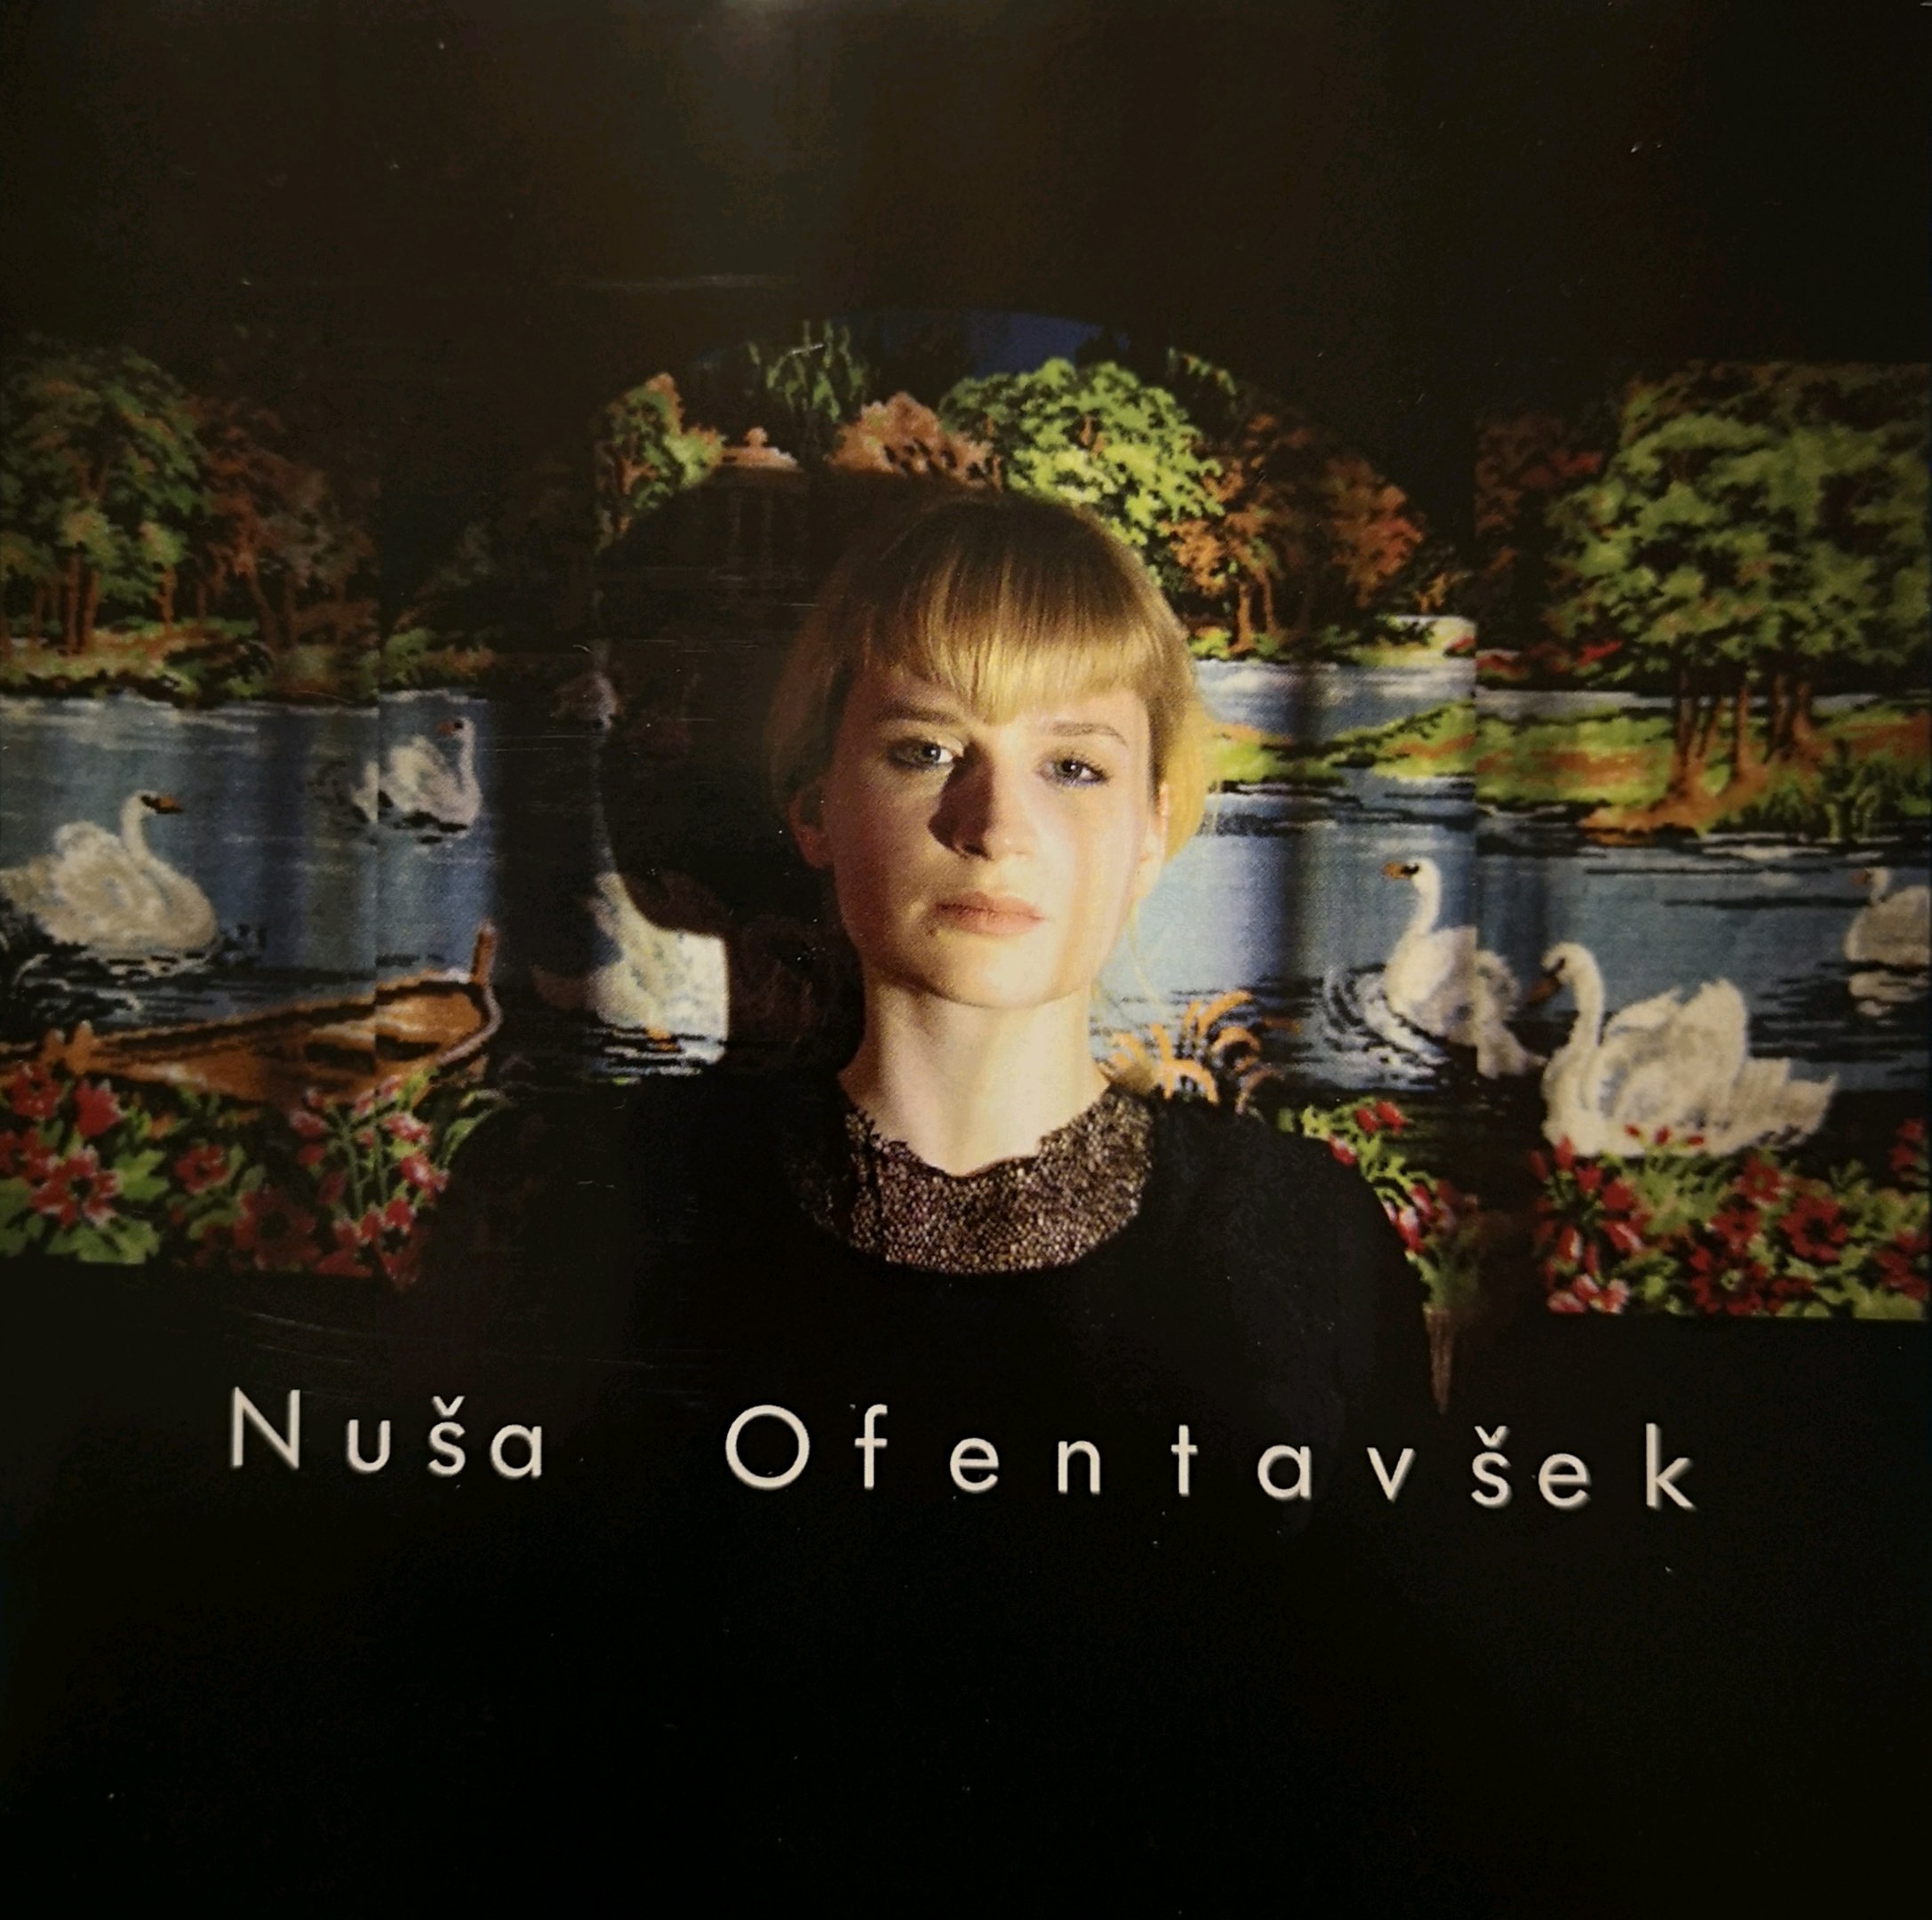 Nusa Ofentavsek